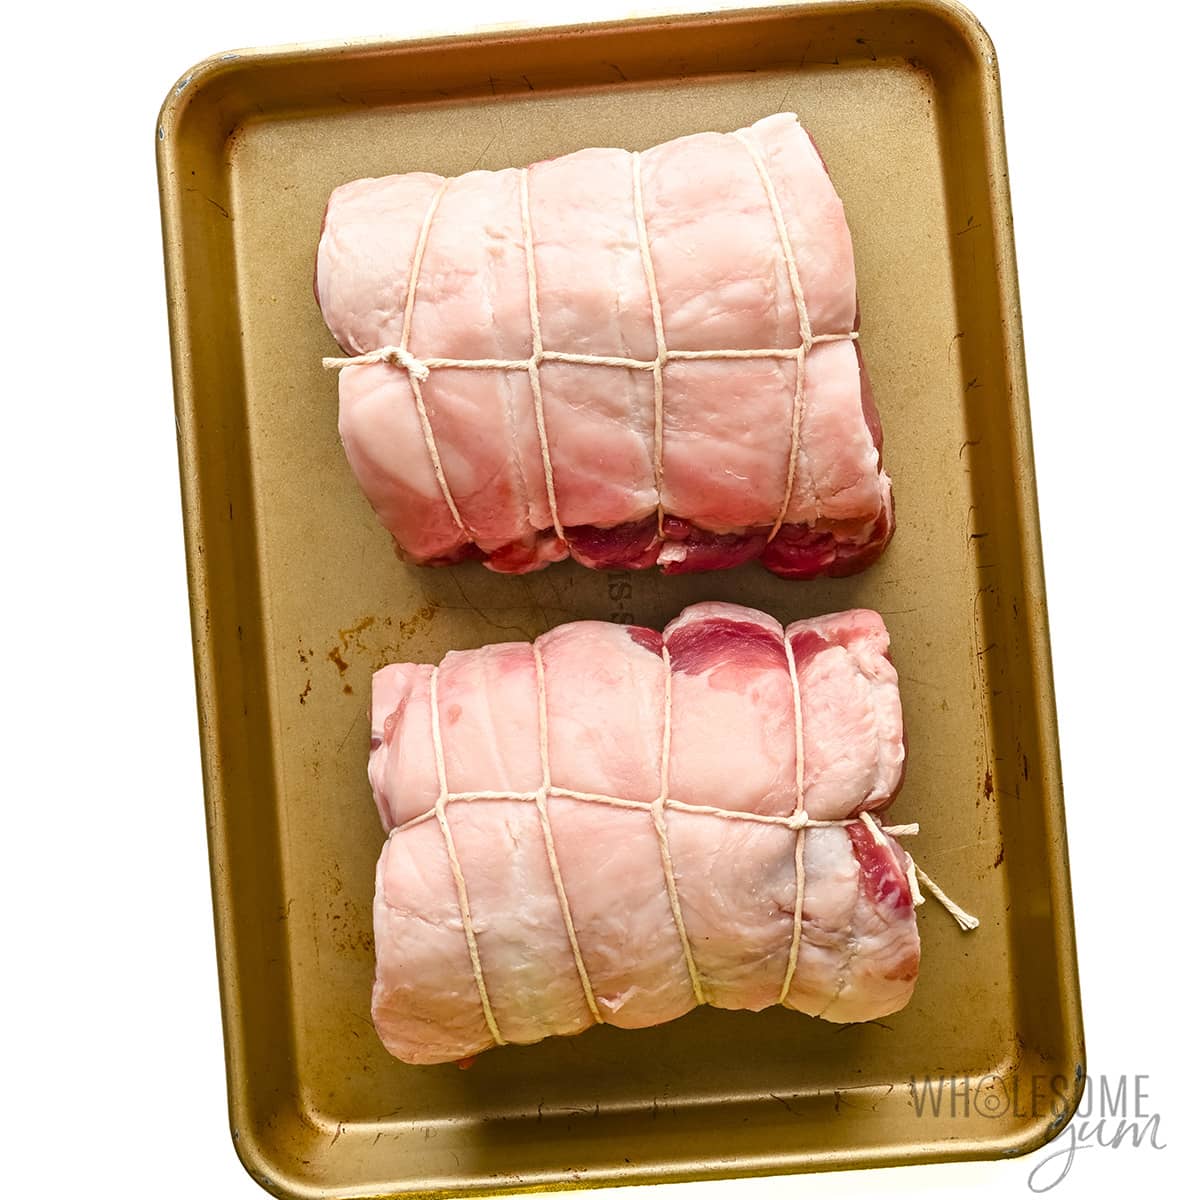 Pork sirloin roast tied with twine on a sheet pan.